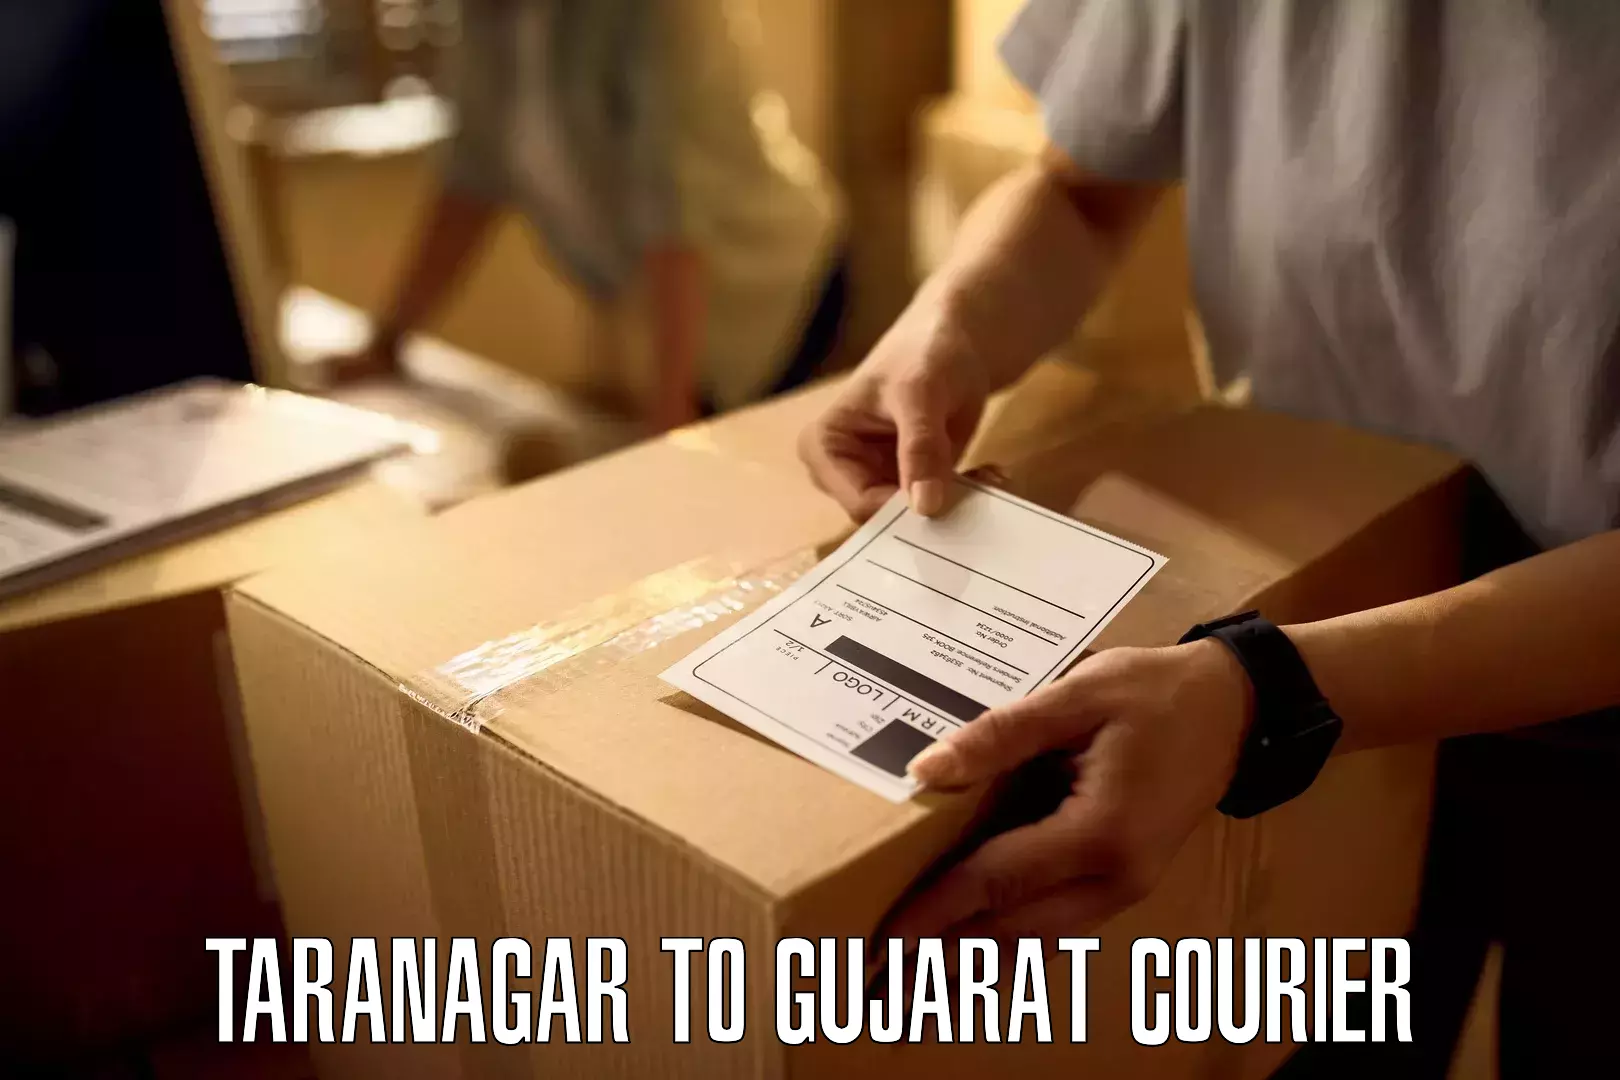 International courier networks Taranagar to Vyara